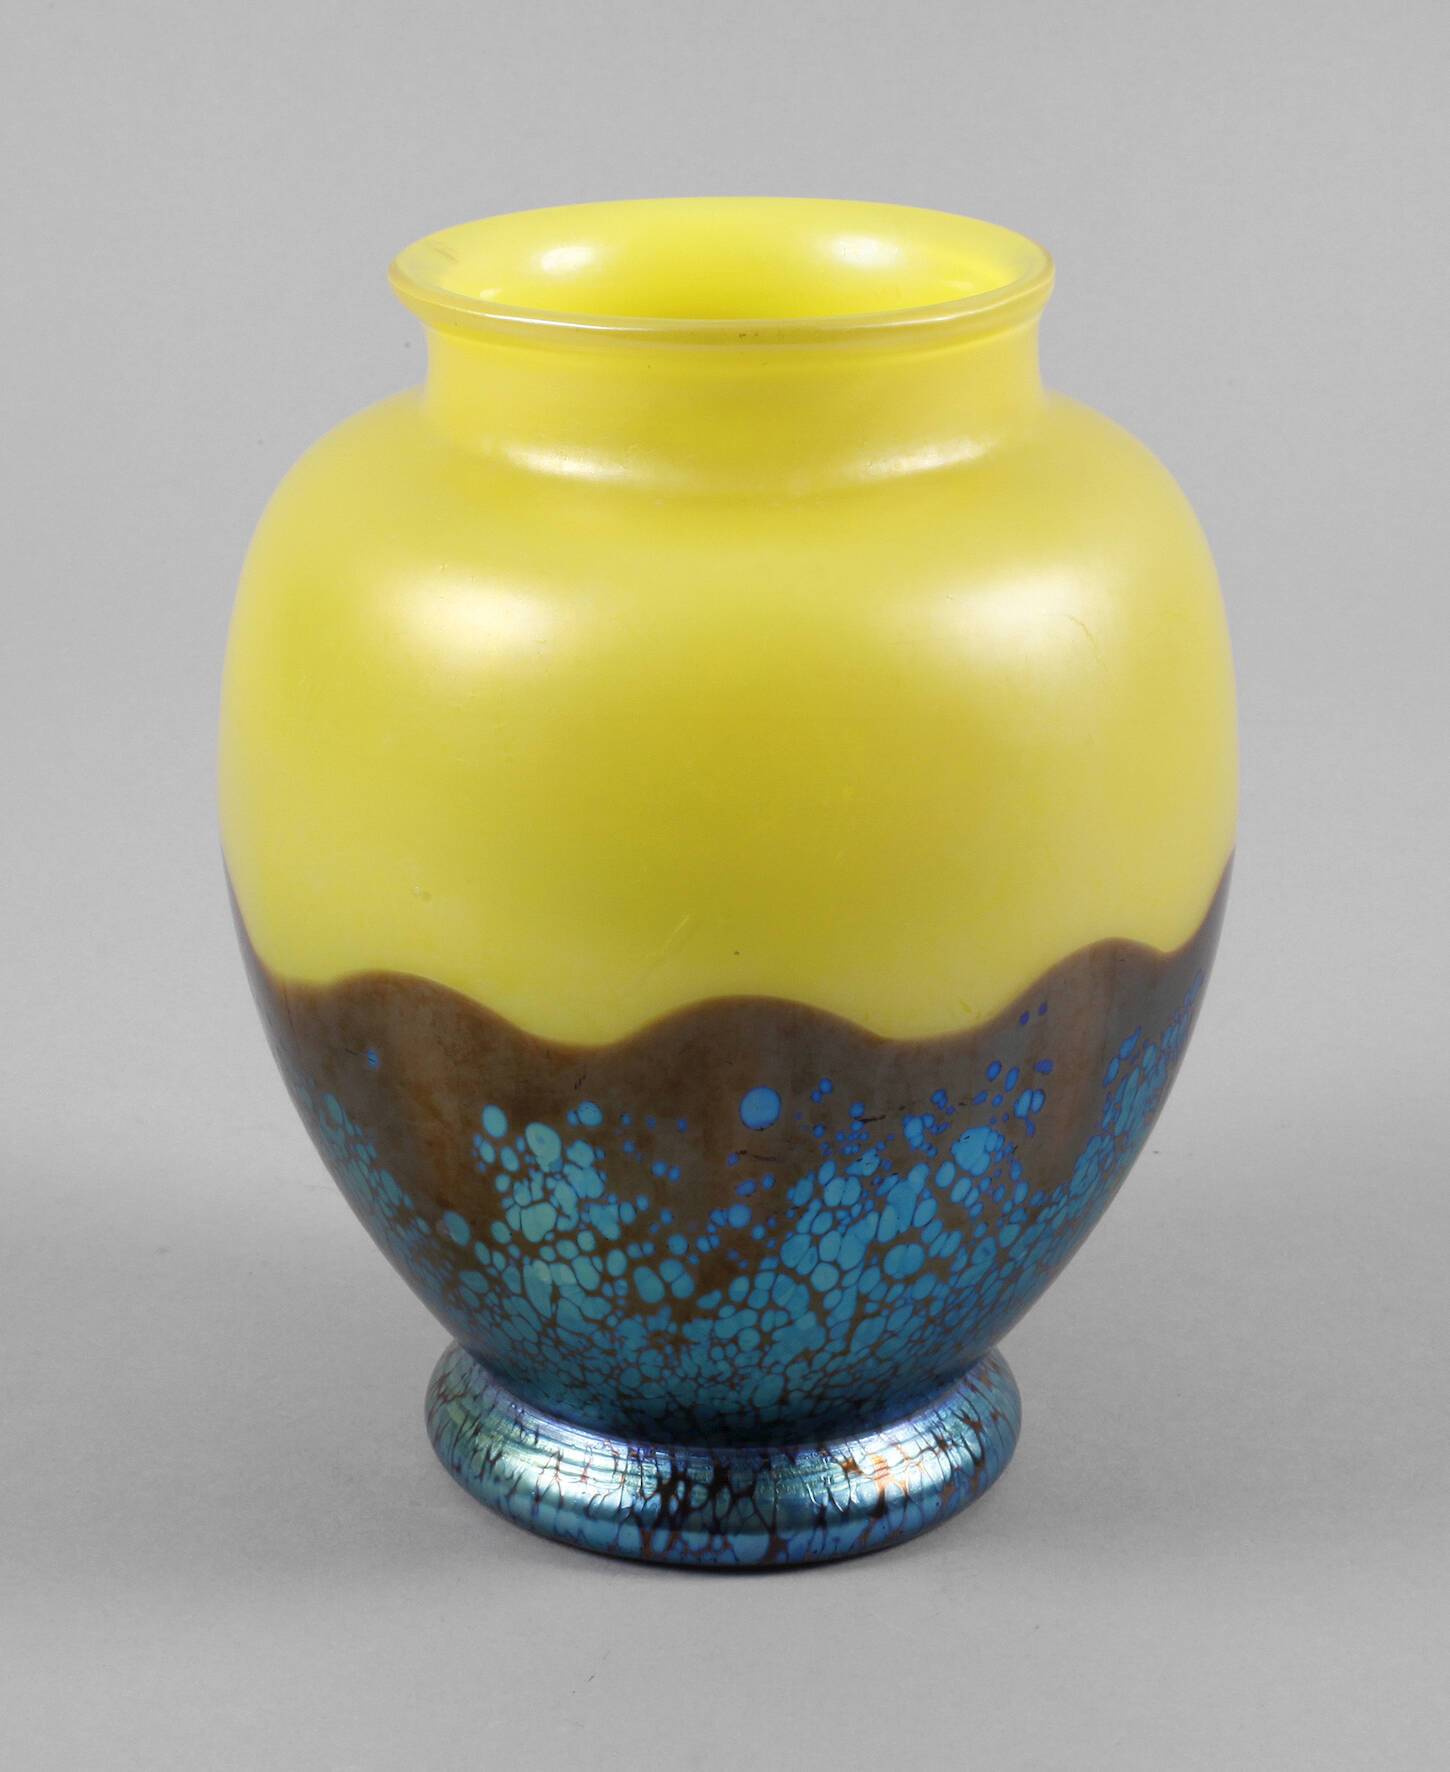 Lötz Wwe. Vase "Kobalt Papillon"